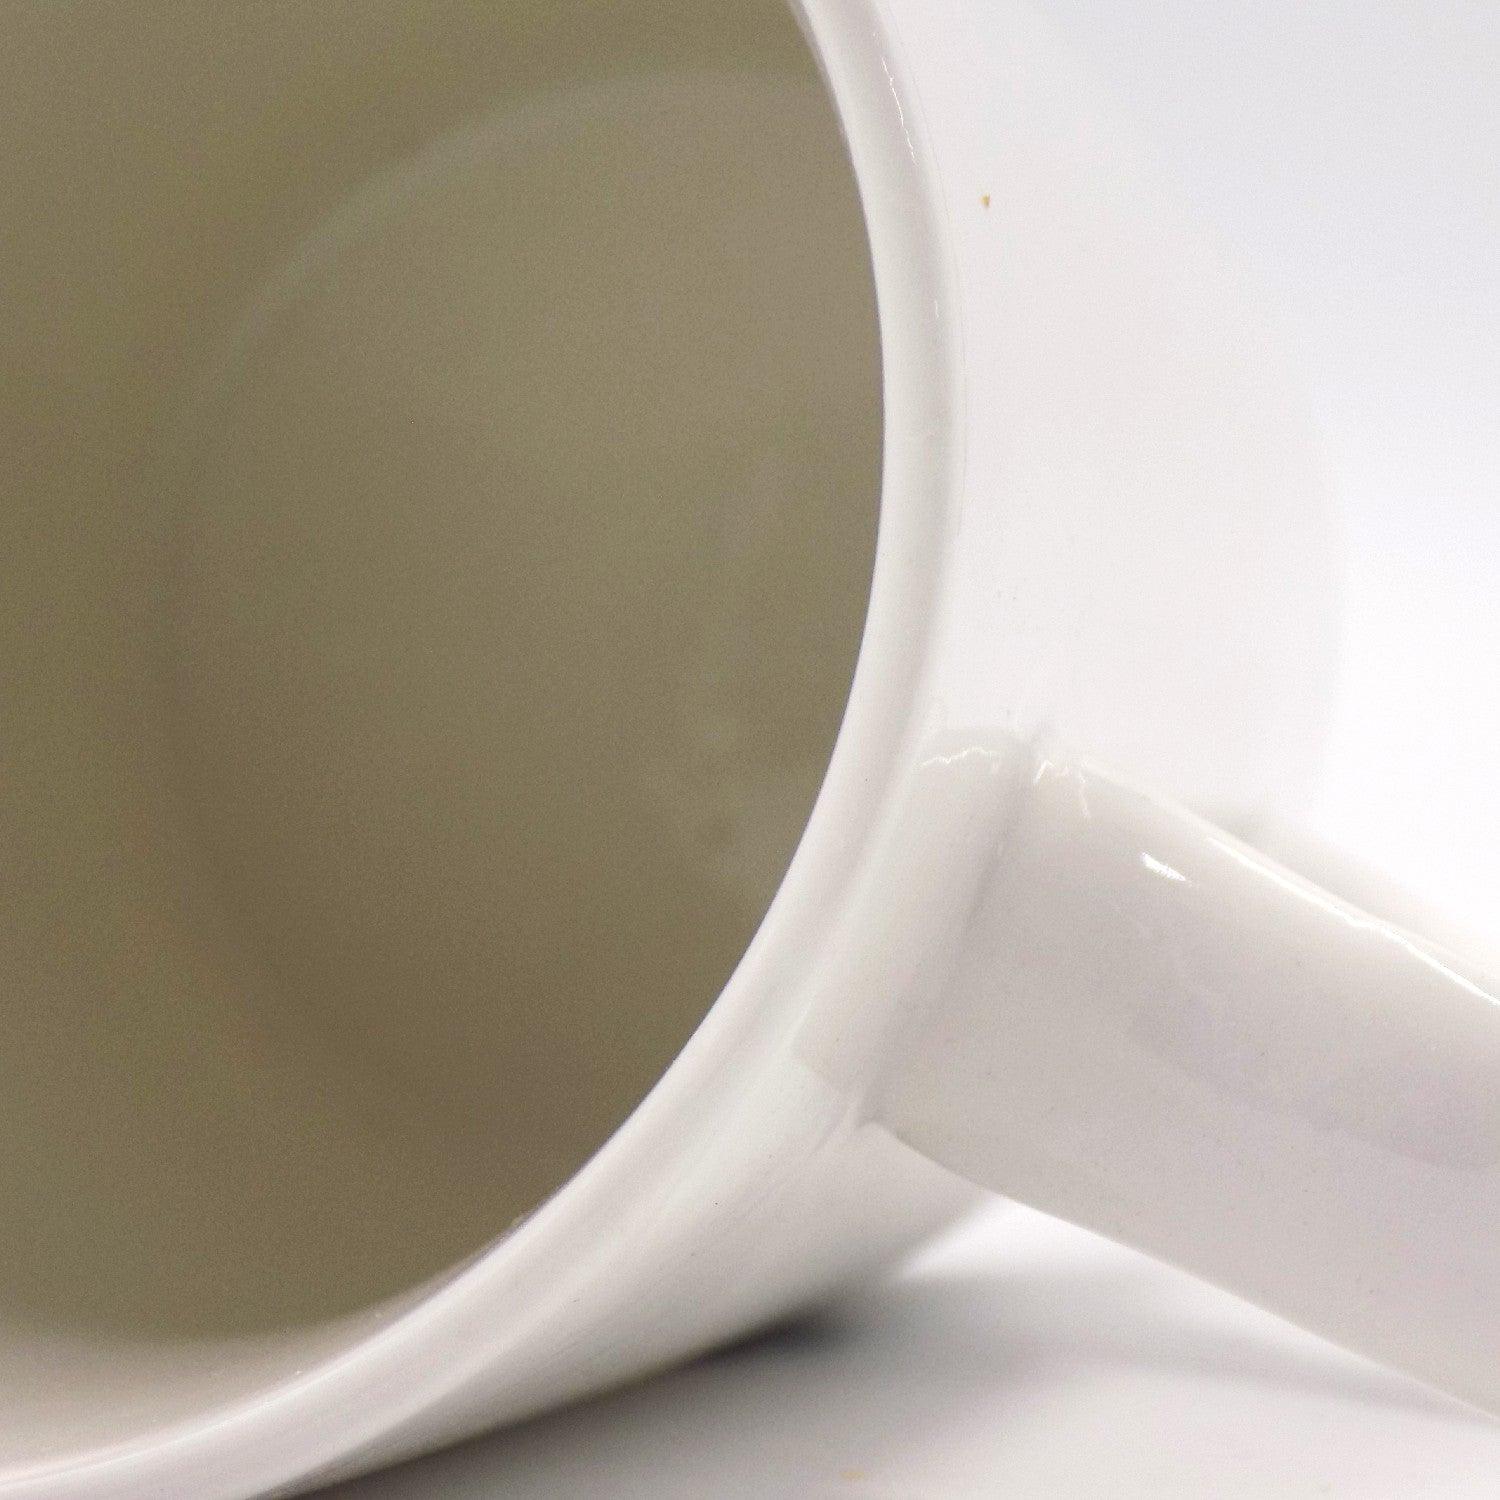 Mug with Lid & Spoon, Flamingo Print, Tea & Coffee Mug, Ceramic, White, 400 mL - MARKET 99